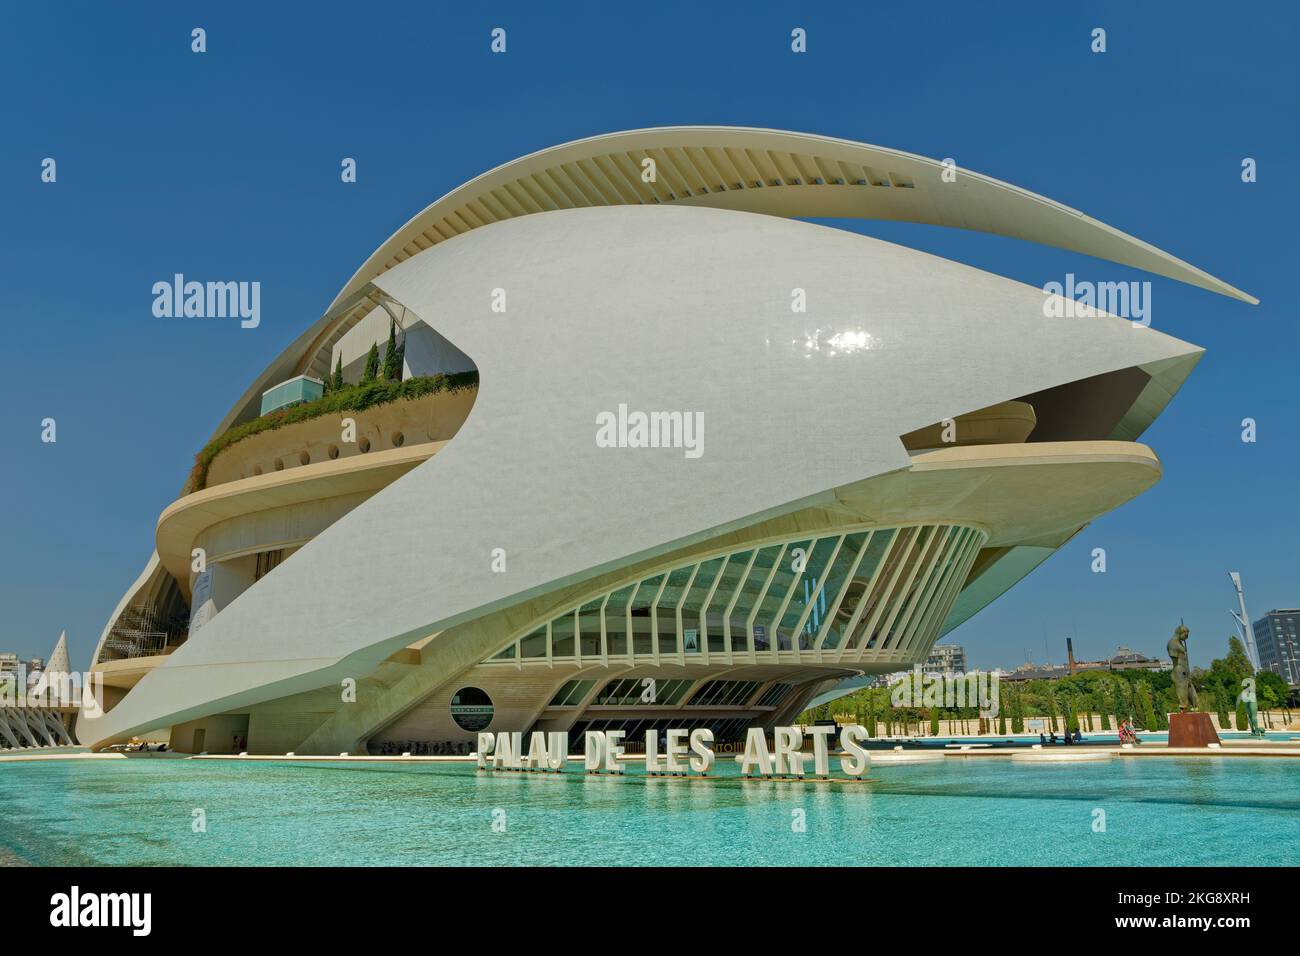 Palau de les Arts Reina Sofia, Palast der Künste in der Stadt Valencia, Provinz Valencia, Spanien. Stockfoto